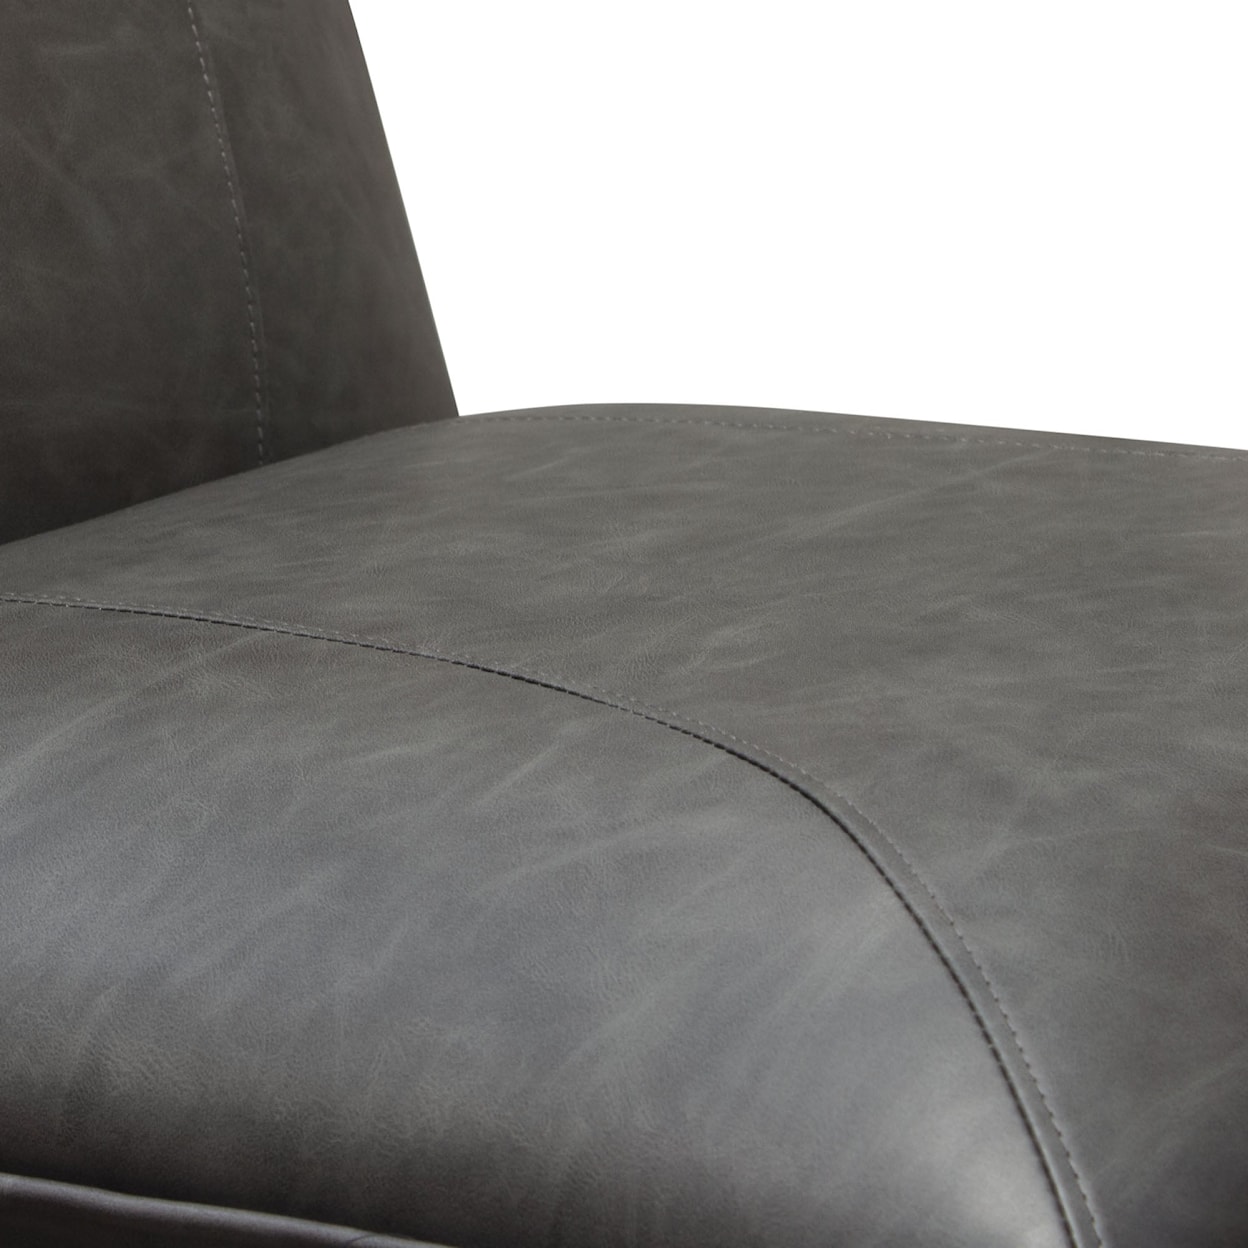 Diamond Sofa Furniture Jordan Armless Accent Chair